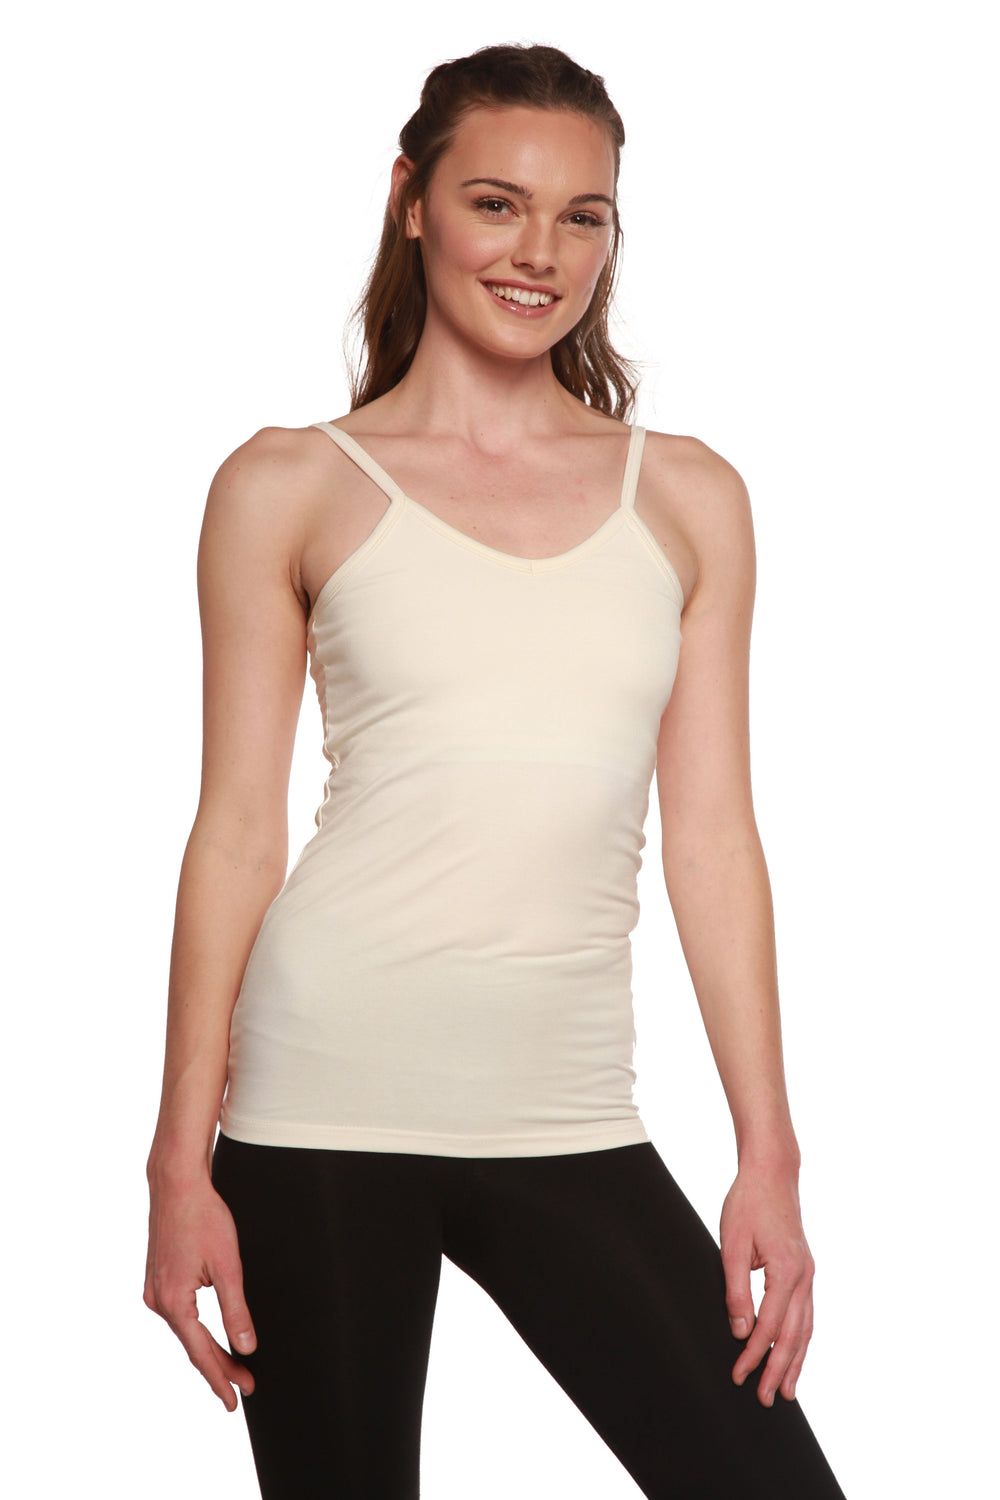  TopDry Women's Bamboo Undershirts - Sweatproof Shirts